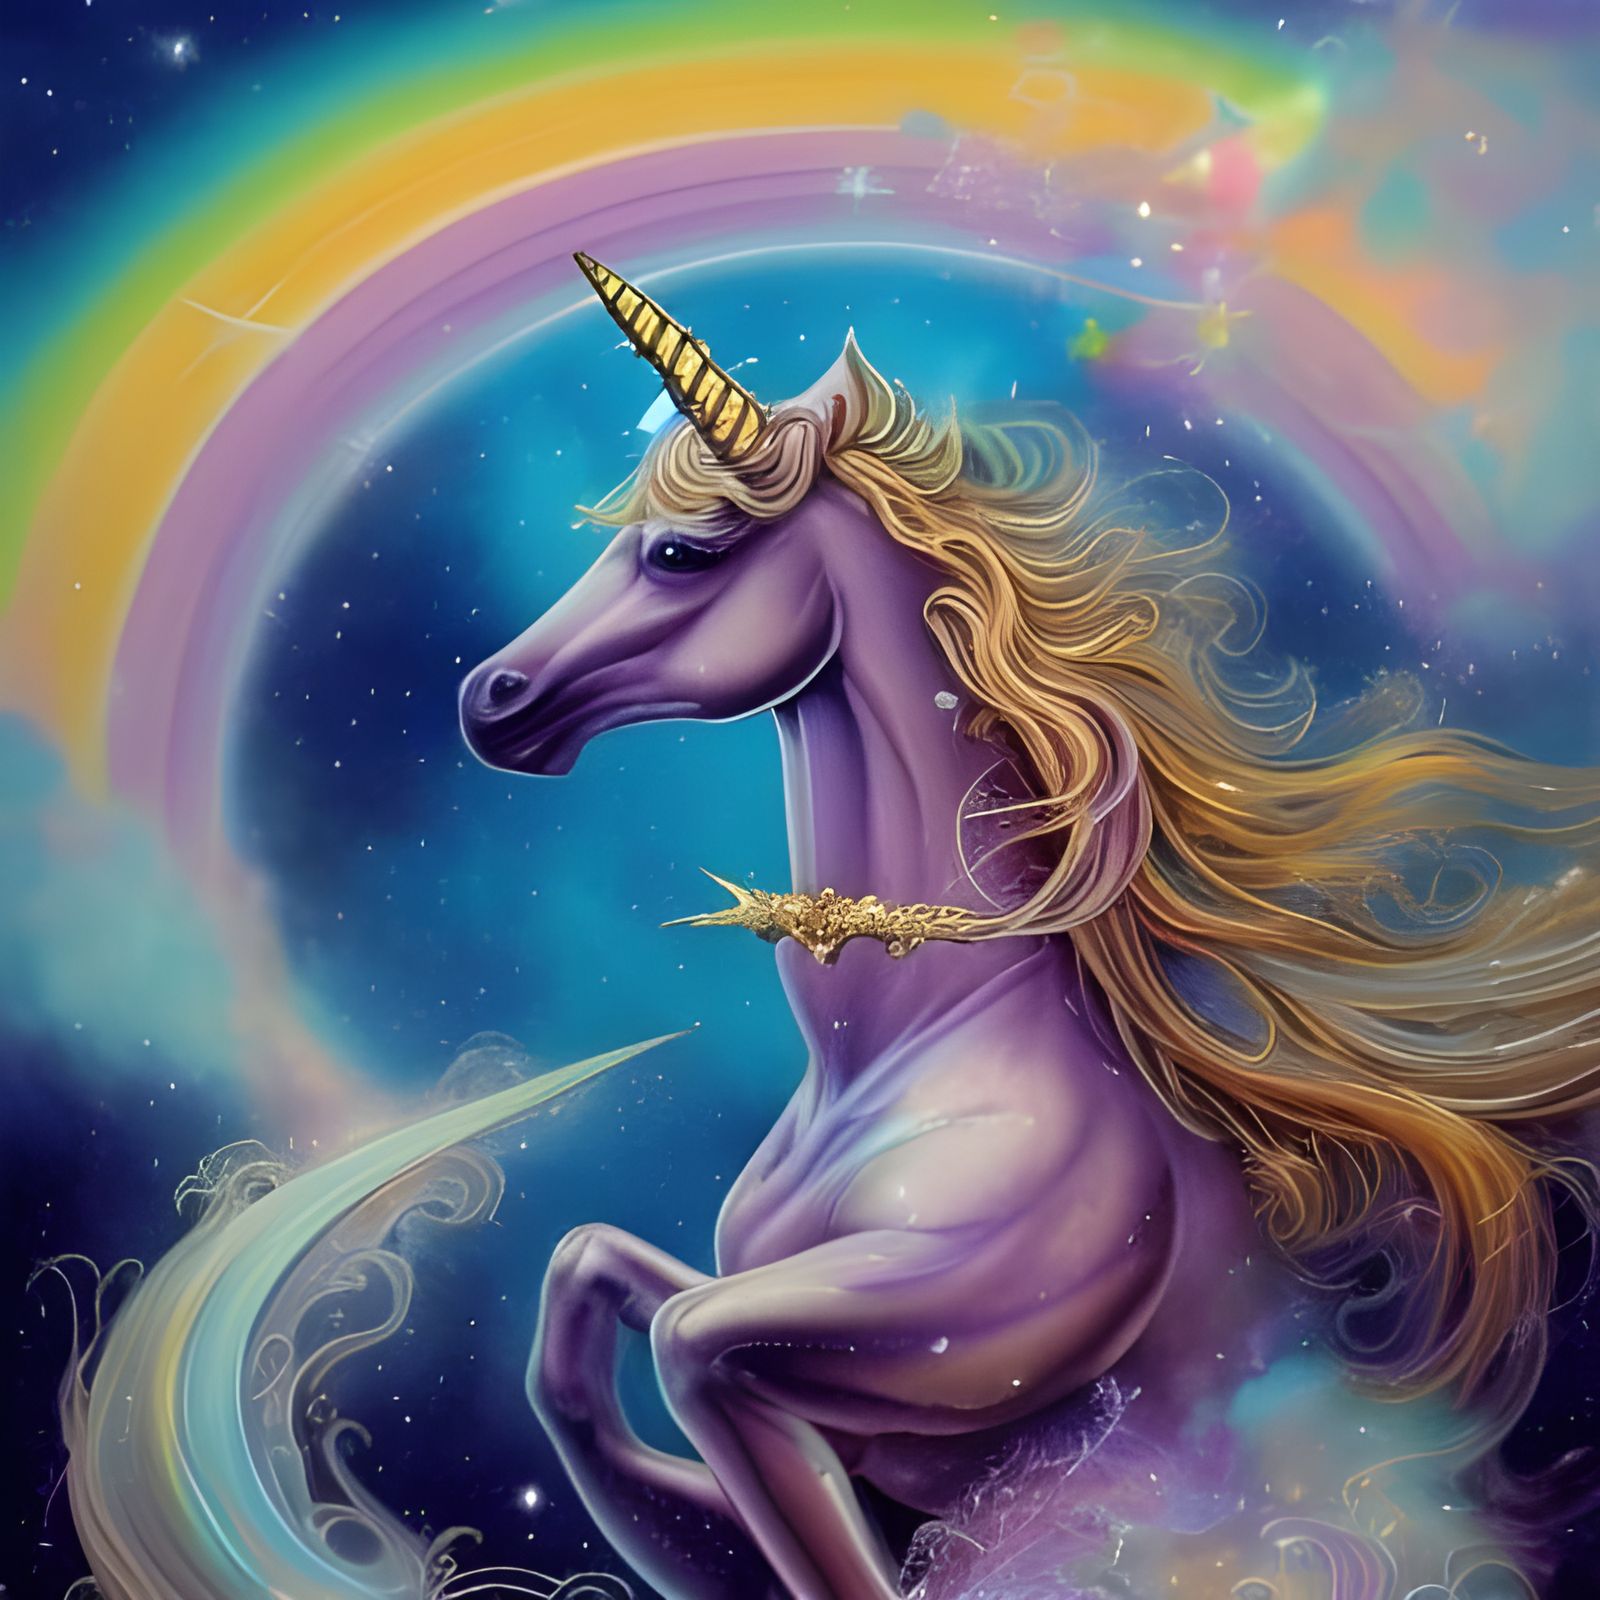 A beautiful celestial unicorn